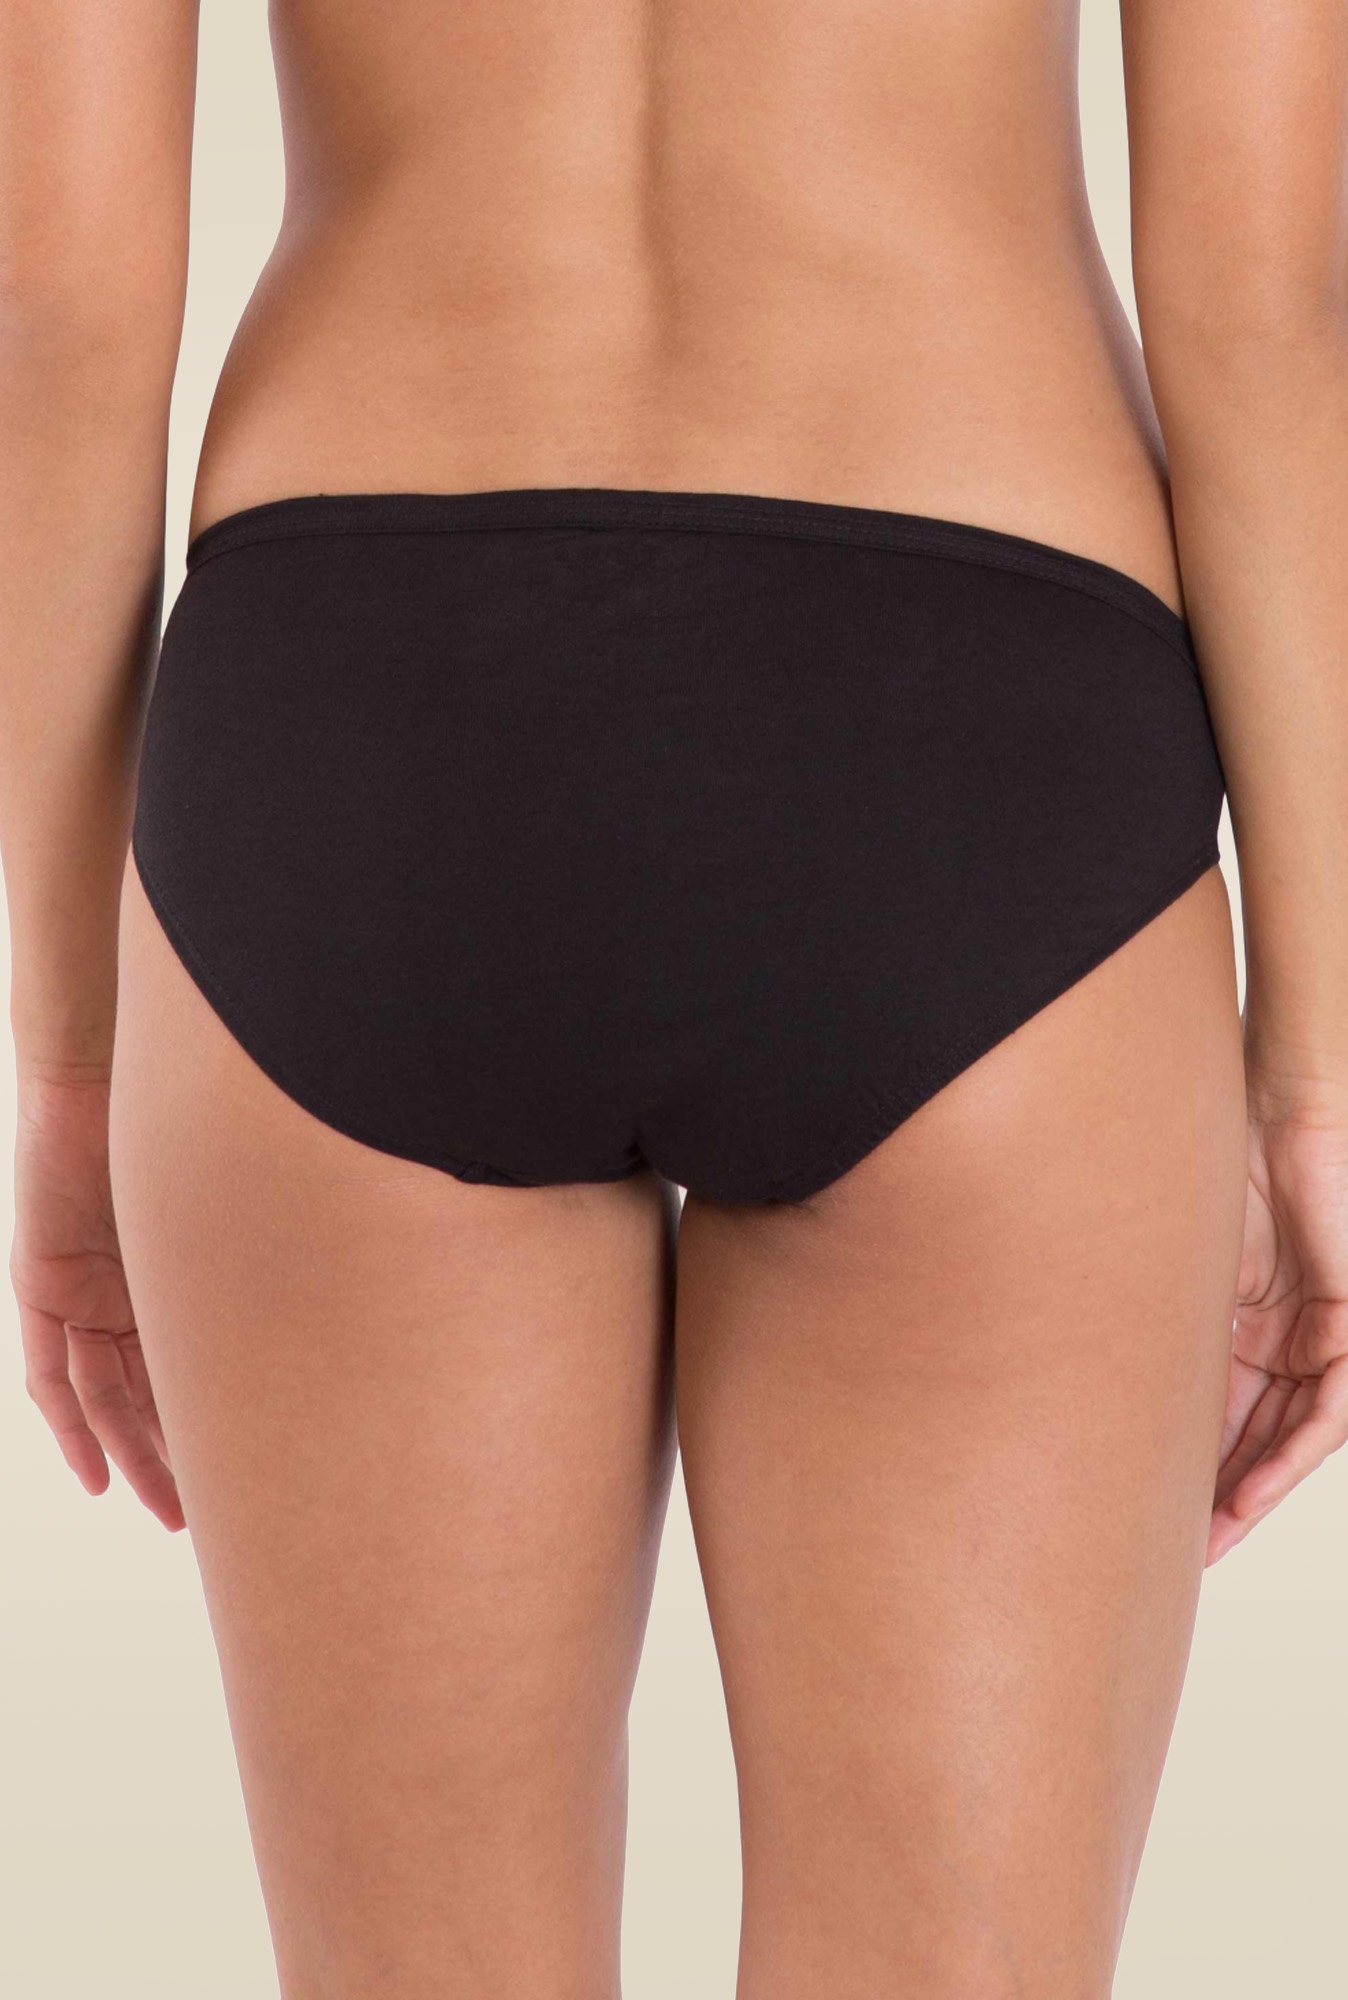 Buy Jockey Dark Assorted Bikini Pack of 3 Style Number-1410 Online